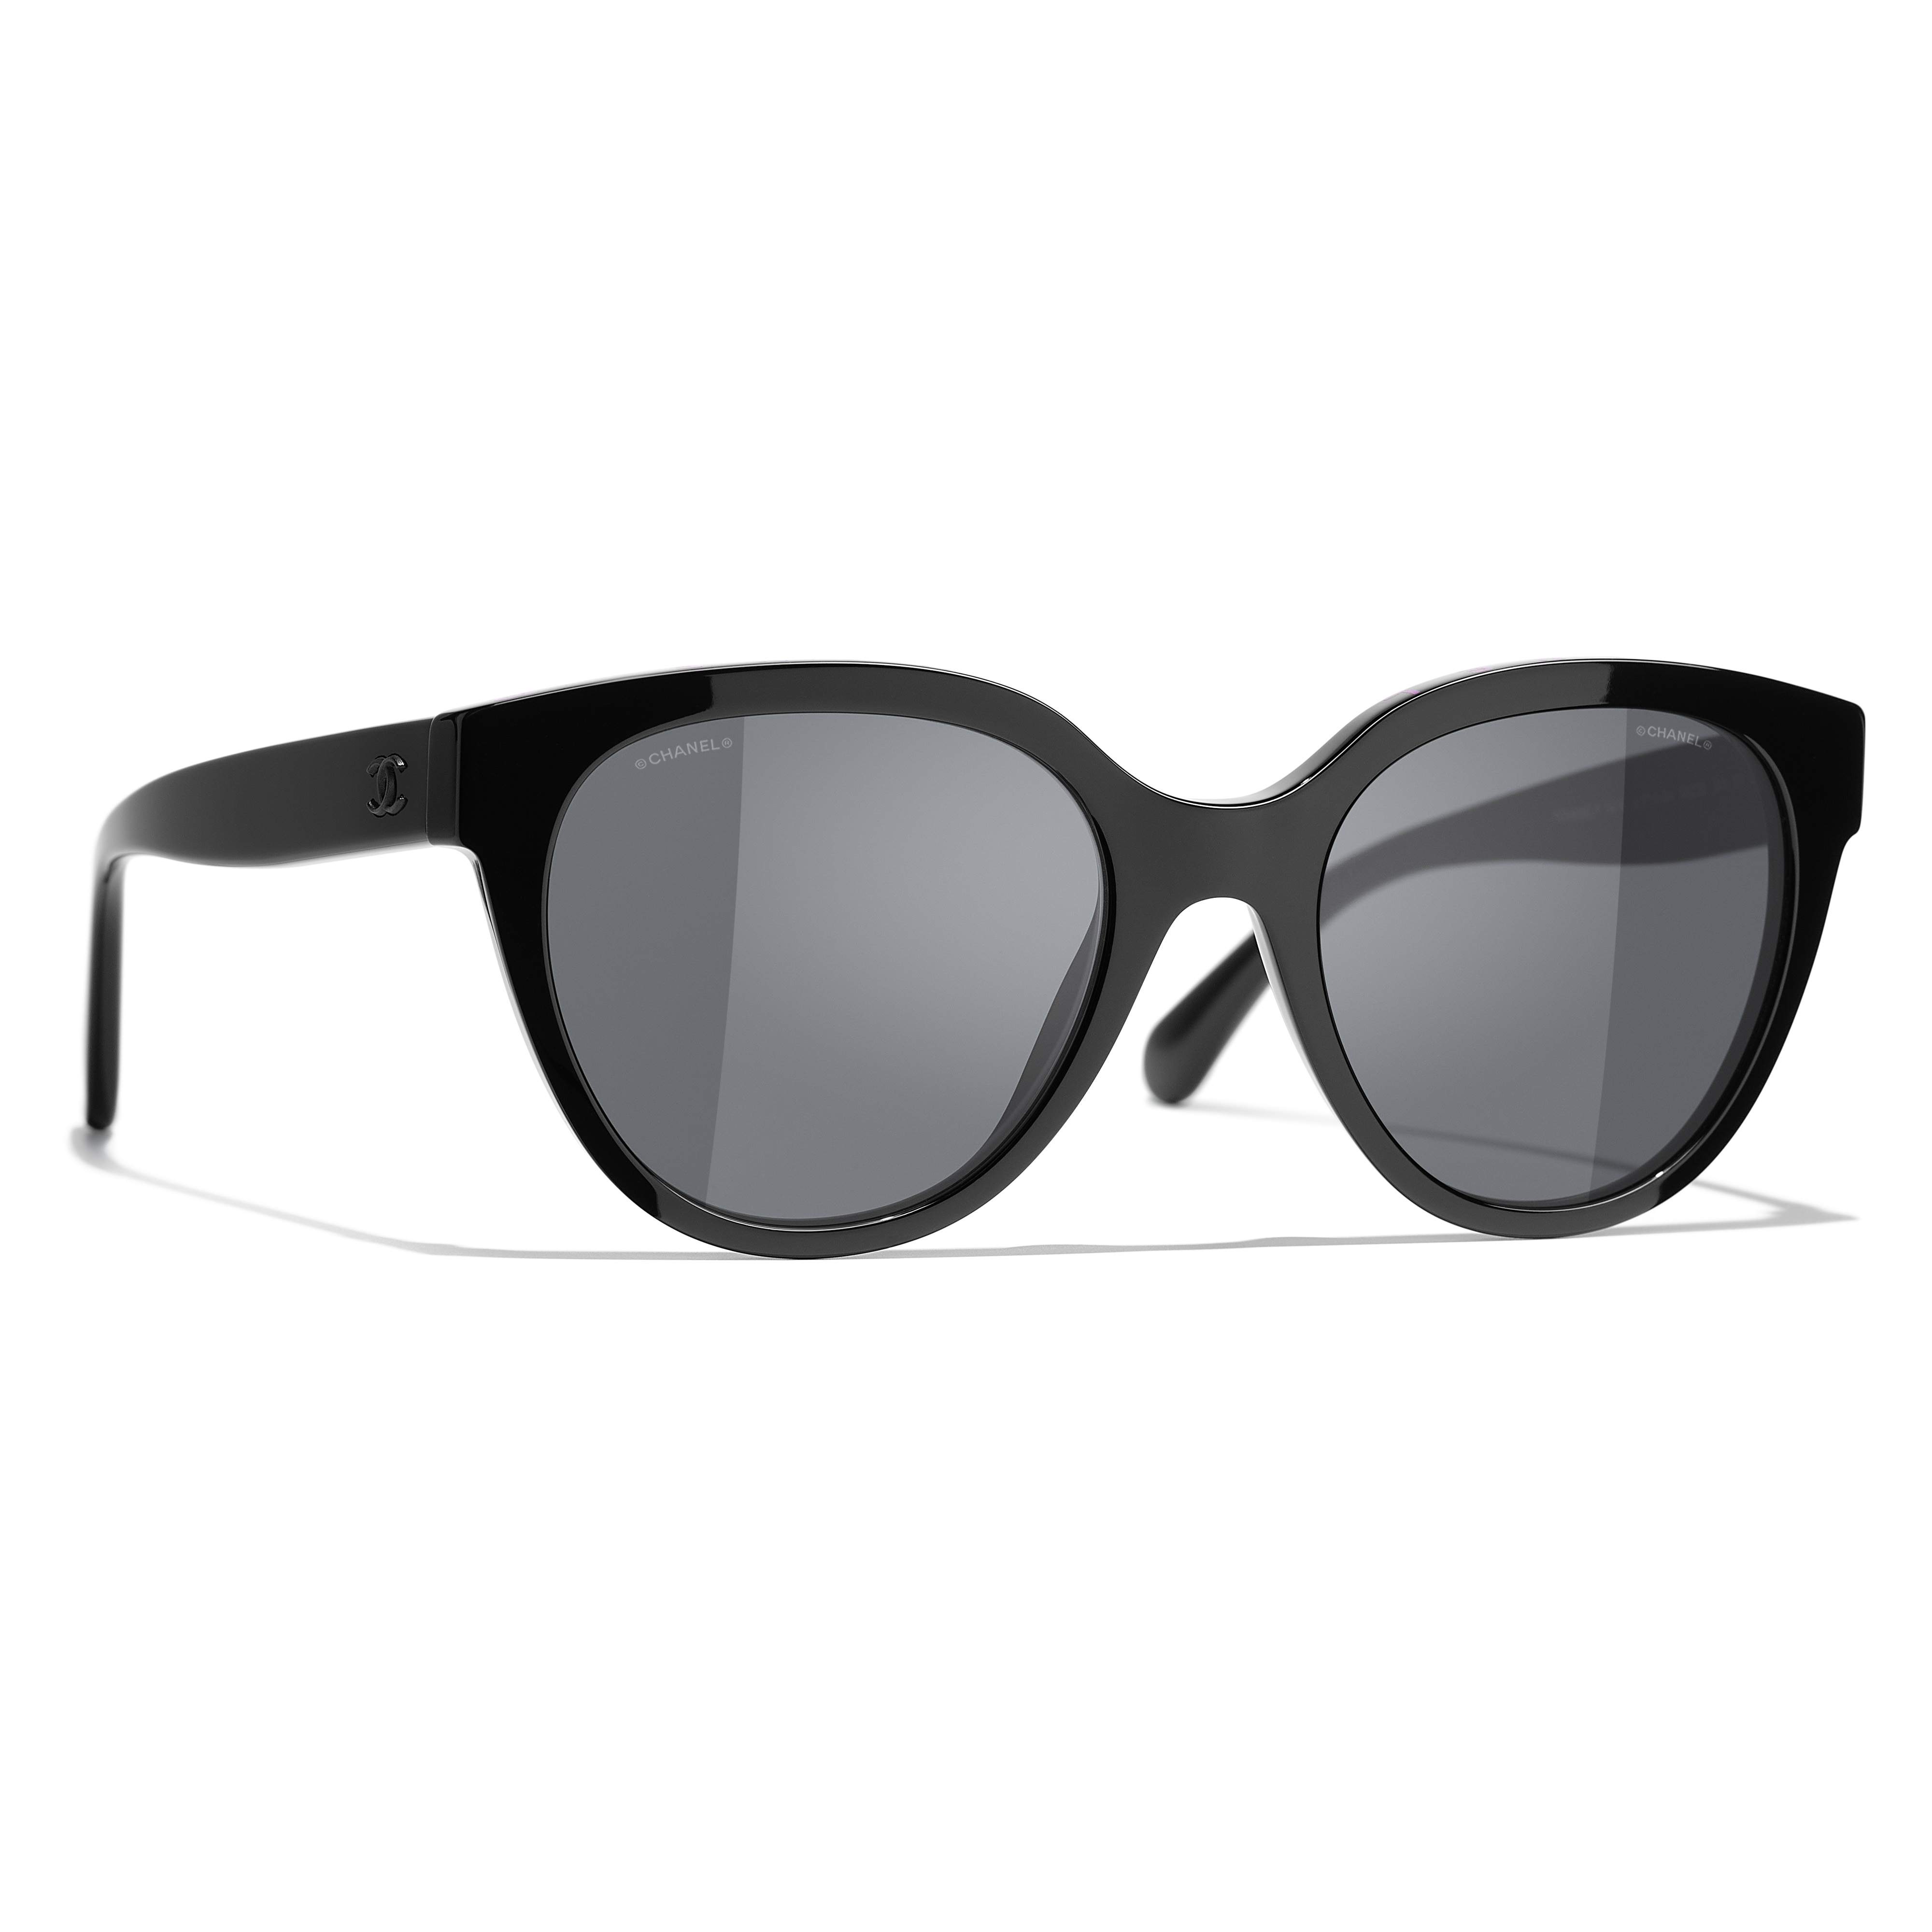 Sunglasses CHANEL CH5414 1711/S4 54-20 Black in stock | Price CHF 294. ...